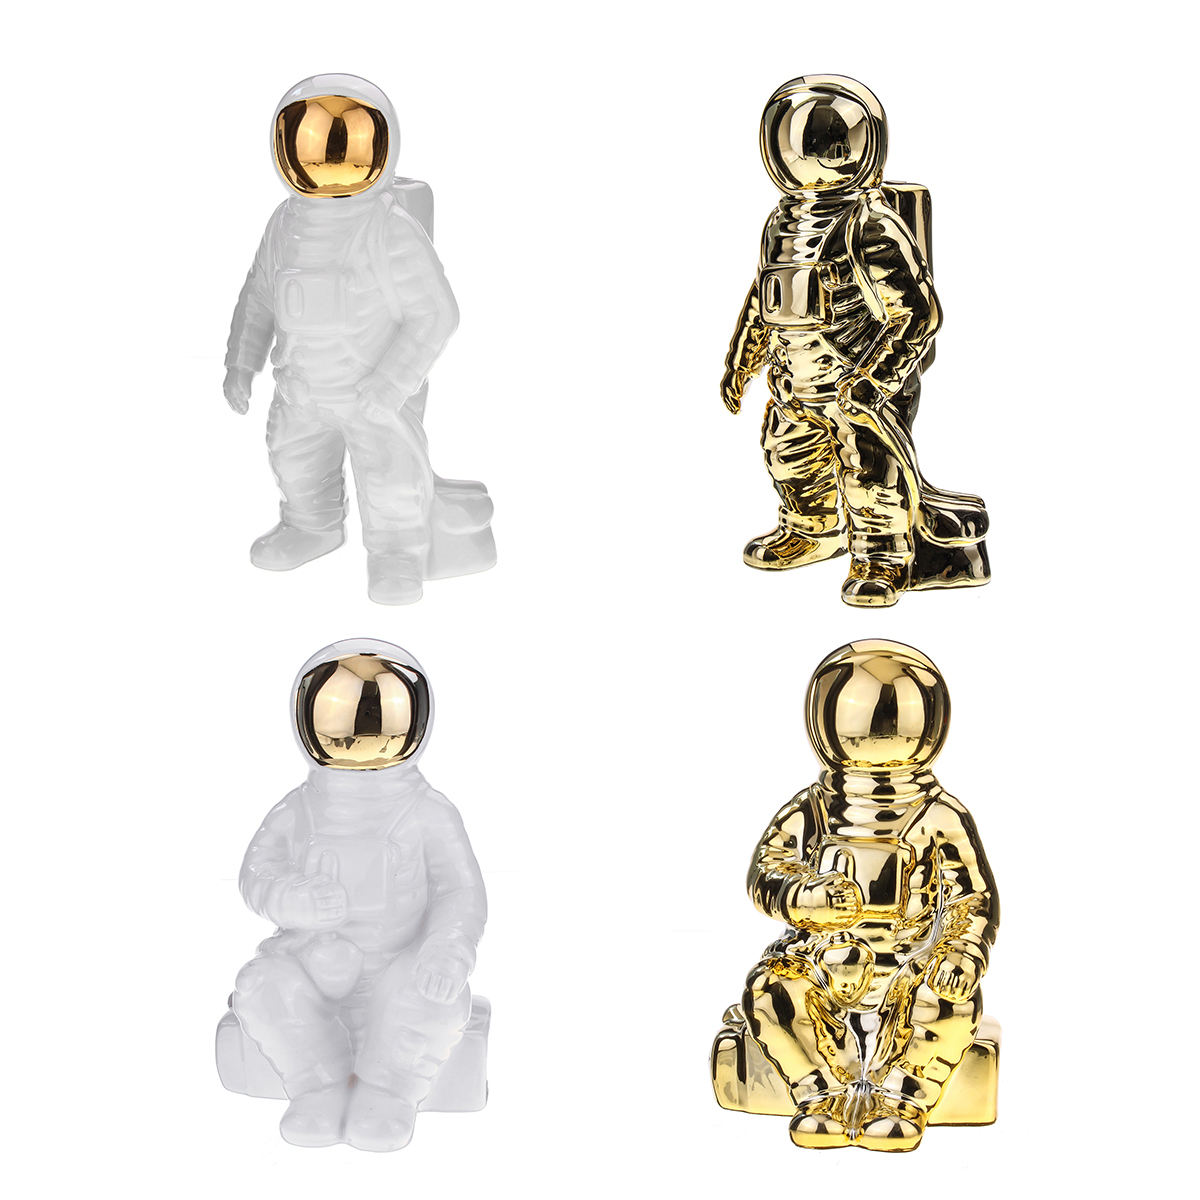 Ceramic-Space-Man-Sculpture-Astronaut-Cosmonaut-Vase-Ornament-Statue-Money-Pot-1520772-9